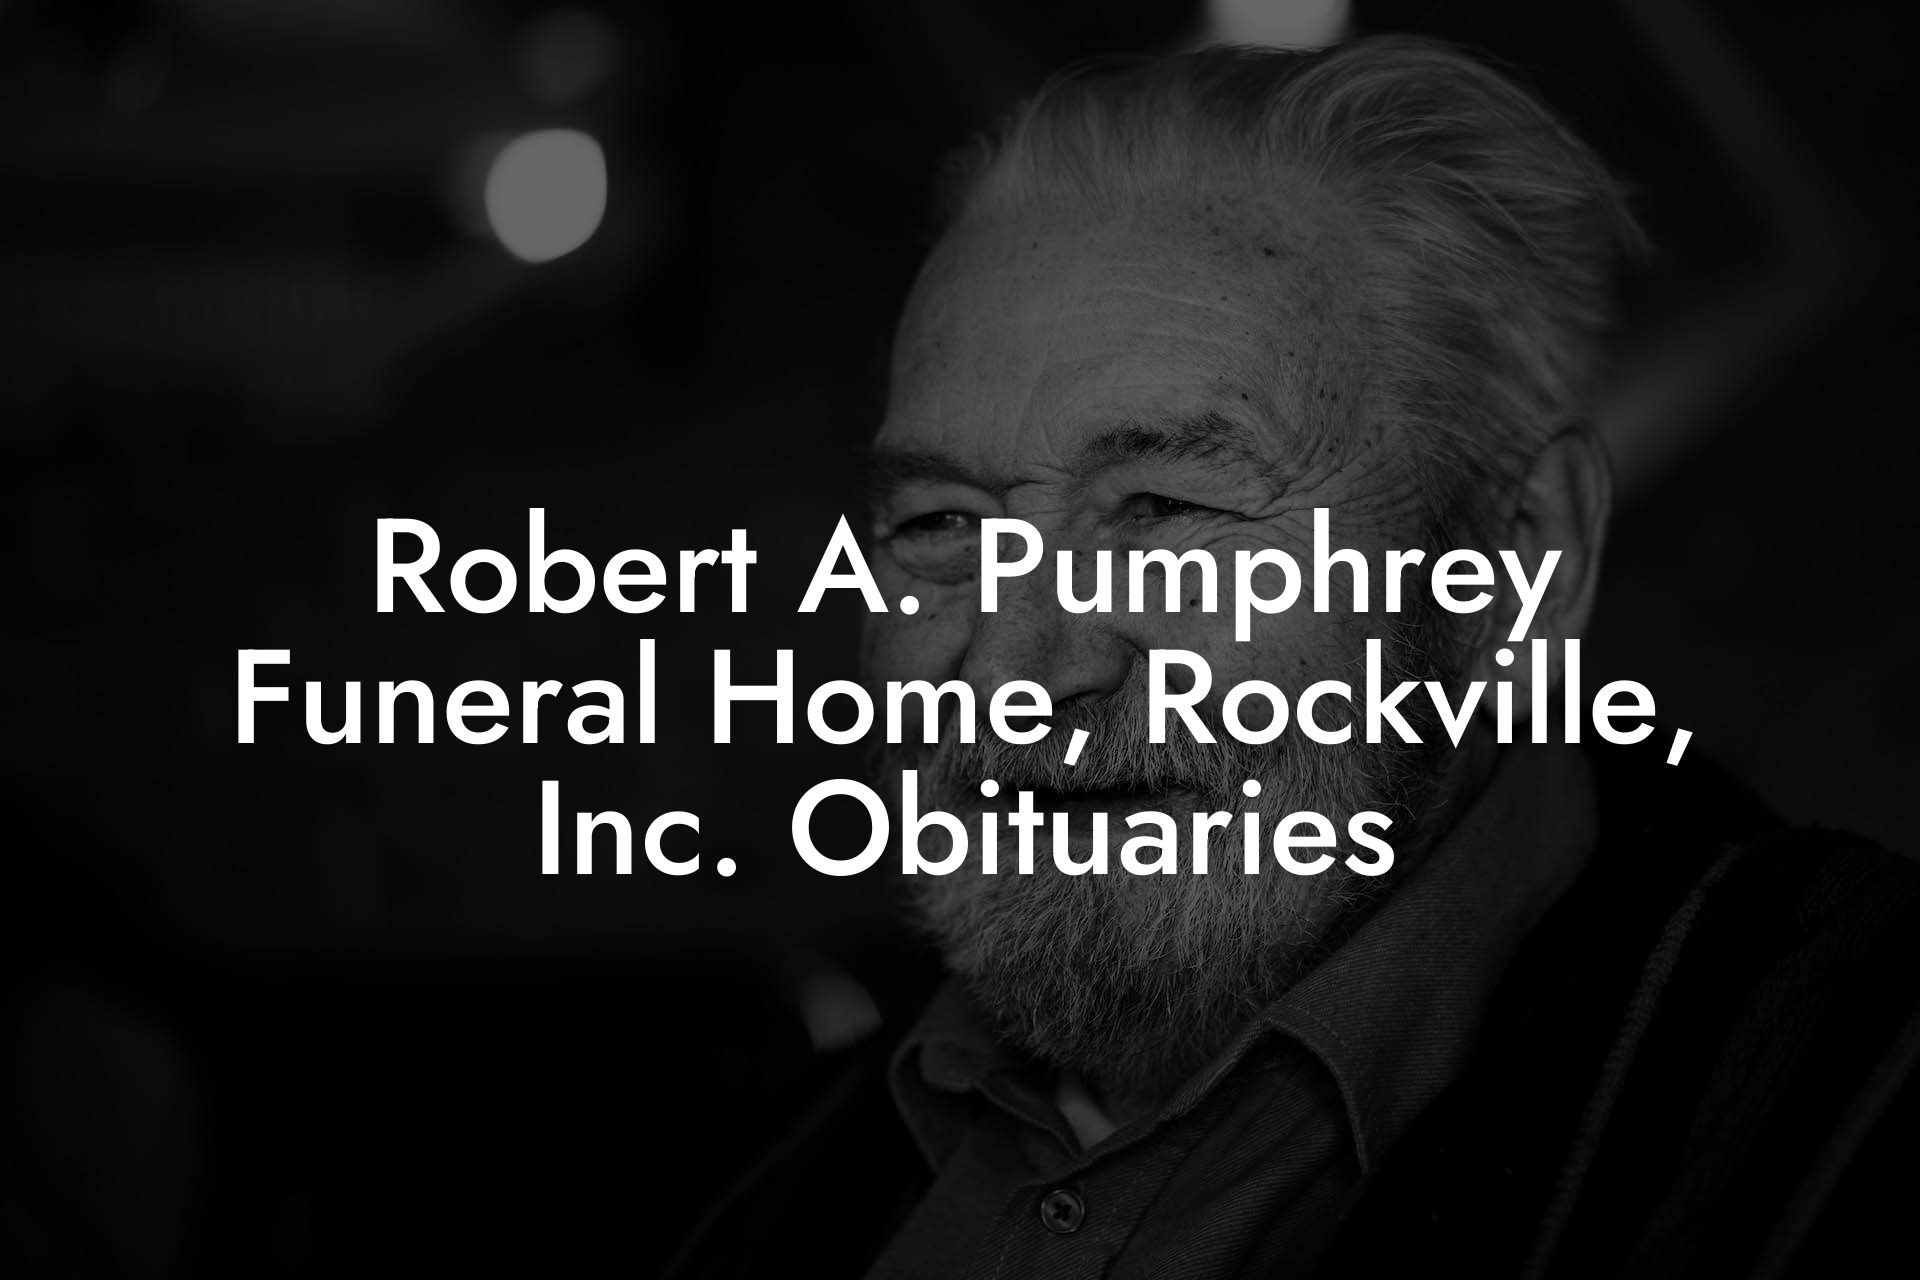 Robert A. Pumphrey Funeral Home, Rockville, Inc. Obituaries